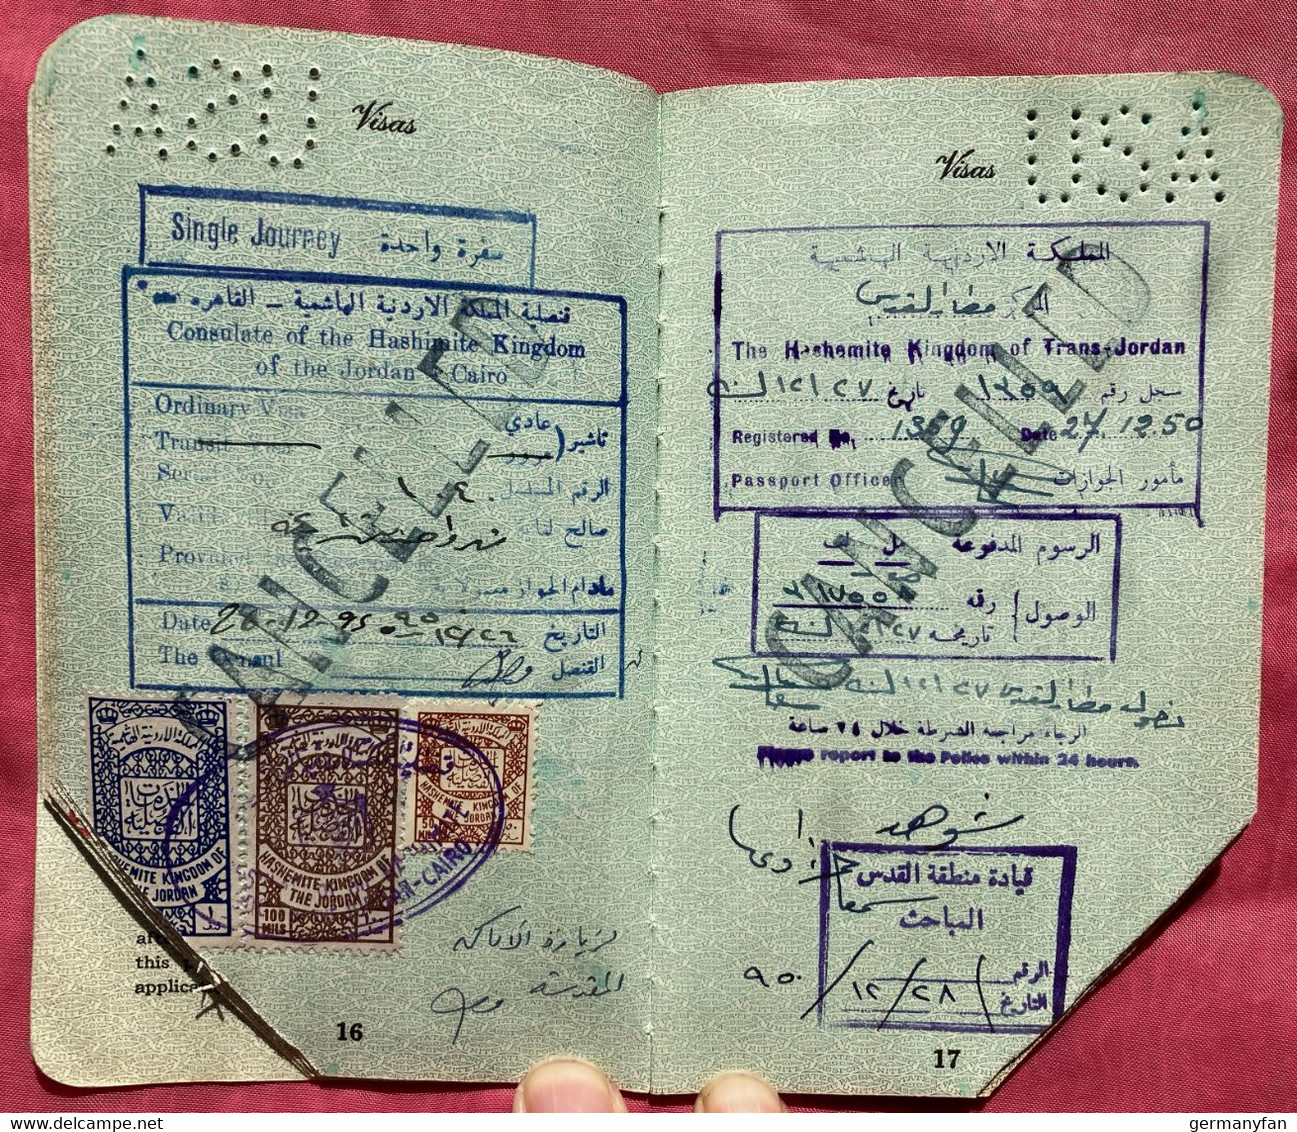 Konvolut USA Diplomatenpass Marc Jennings Robinson Richter ORG Berlin CORA Nünberg viele Stempel diplomatic passport